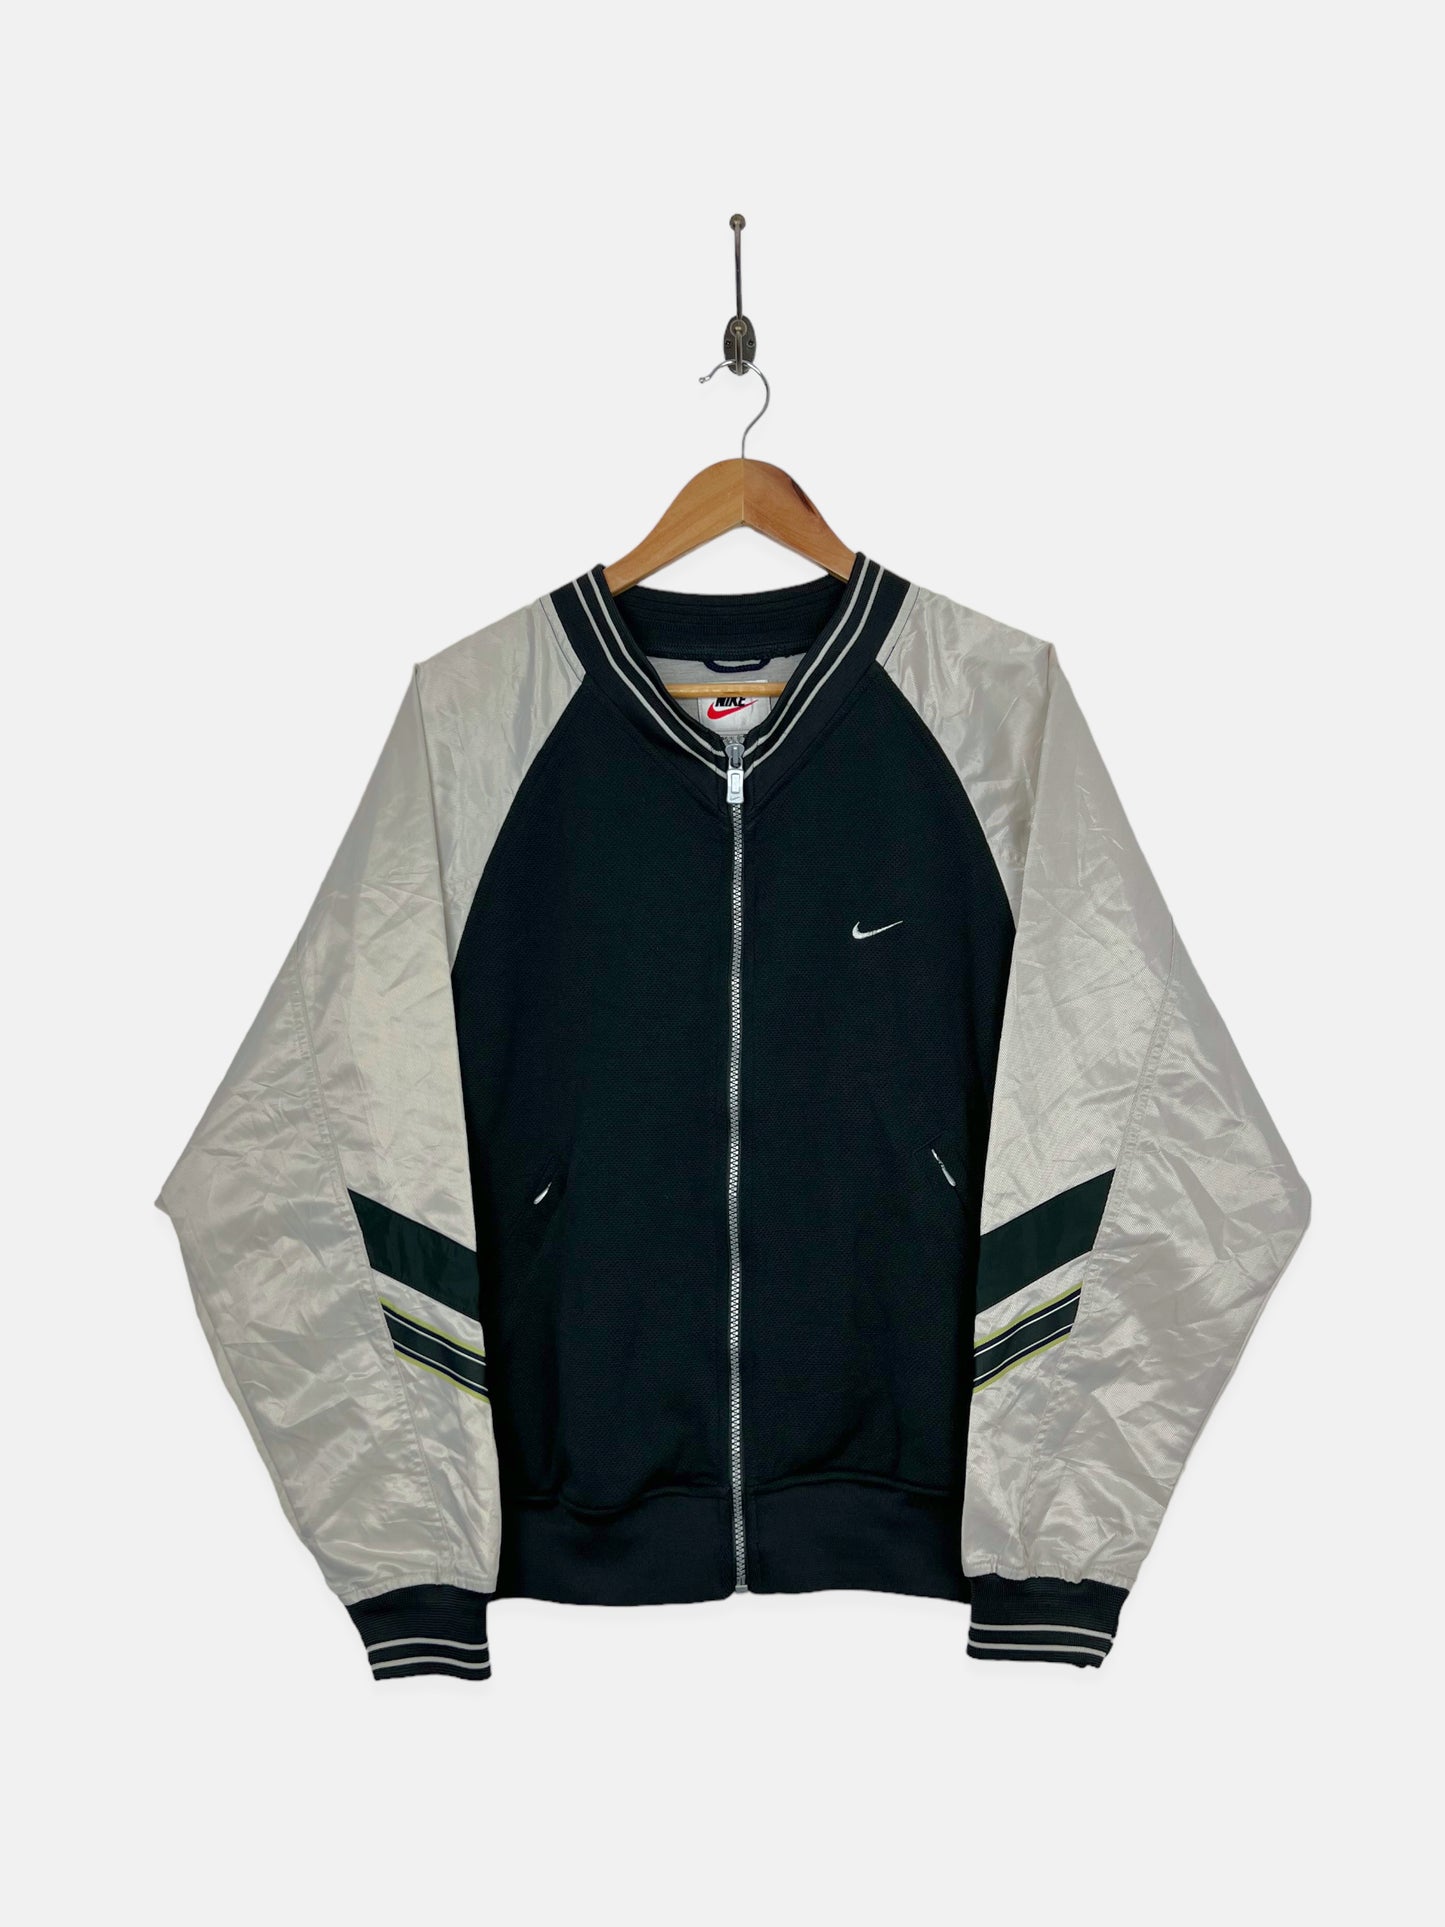 90's Nike Embroidered Vintage Jacket Size 12-14